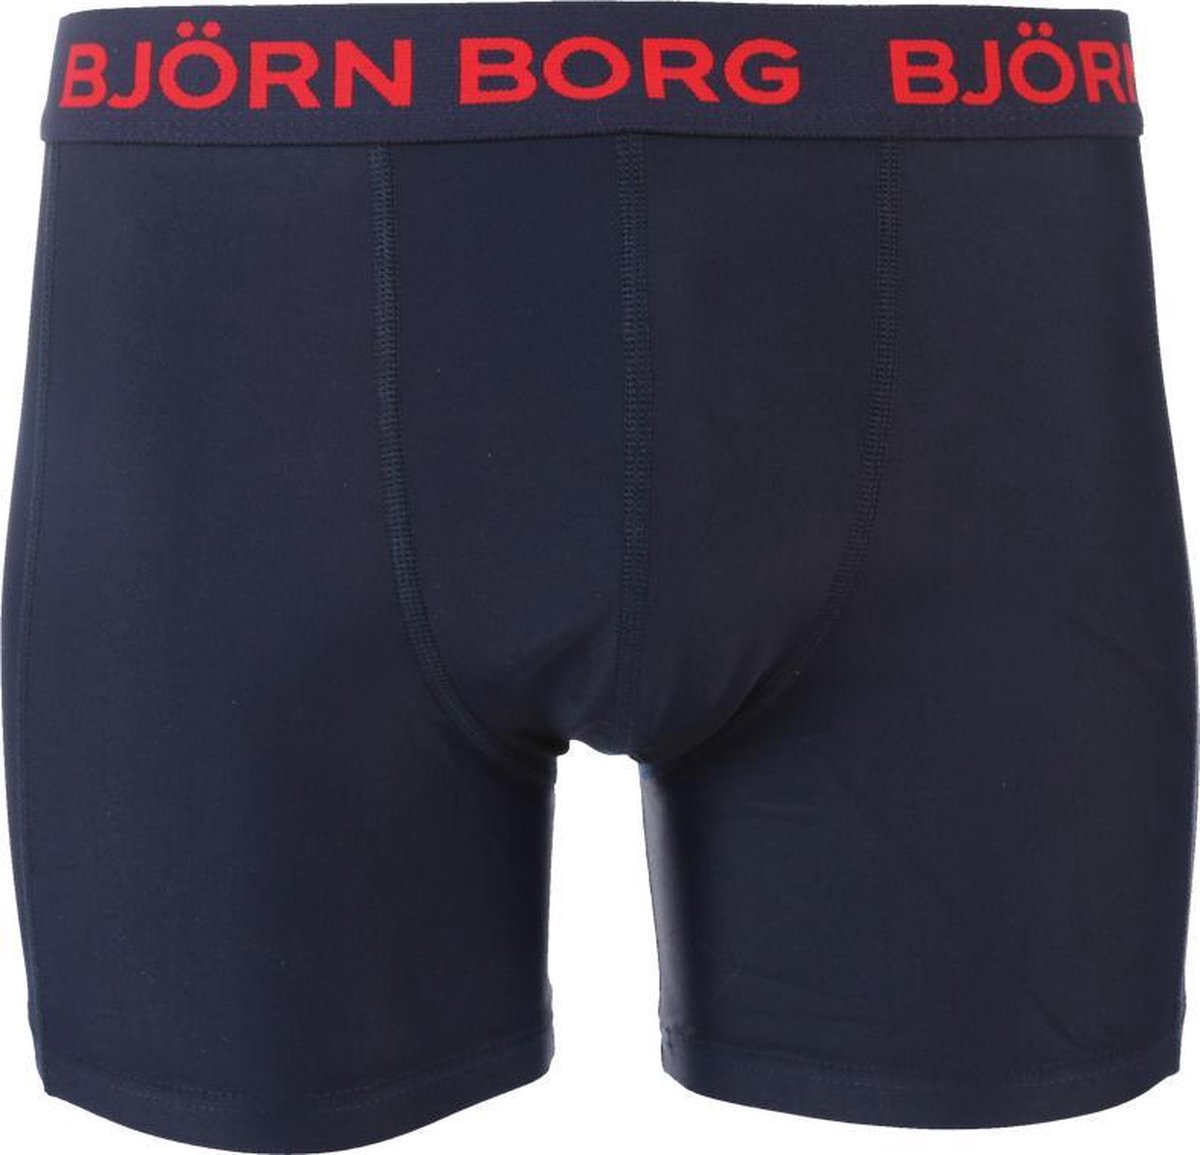 Borg Strakke Zwembroek Blauw - S | bol.com